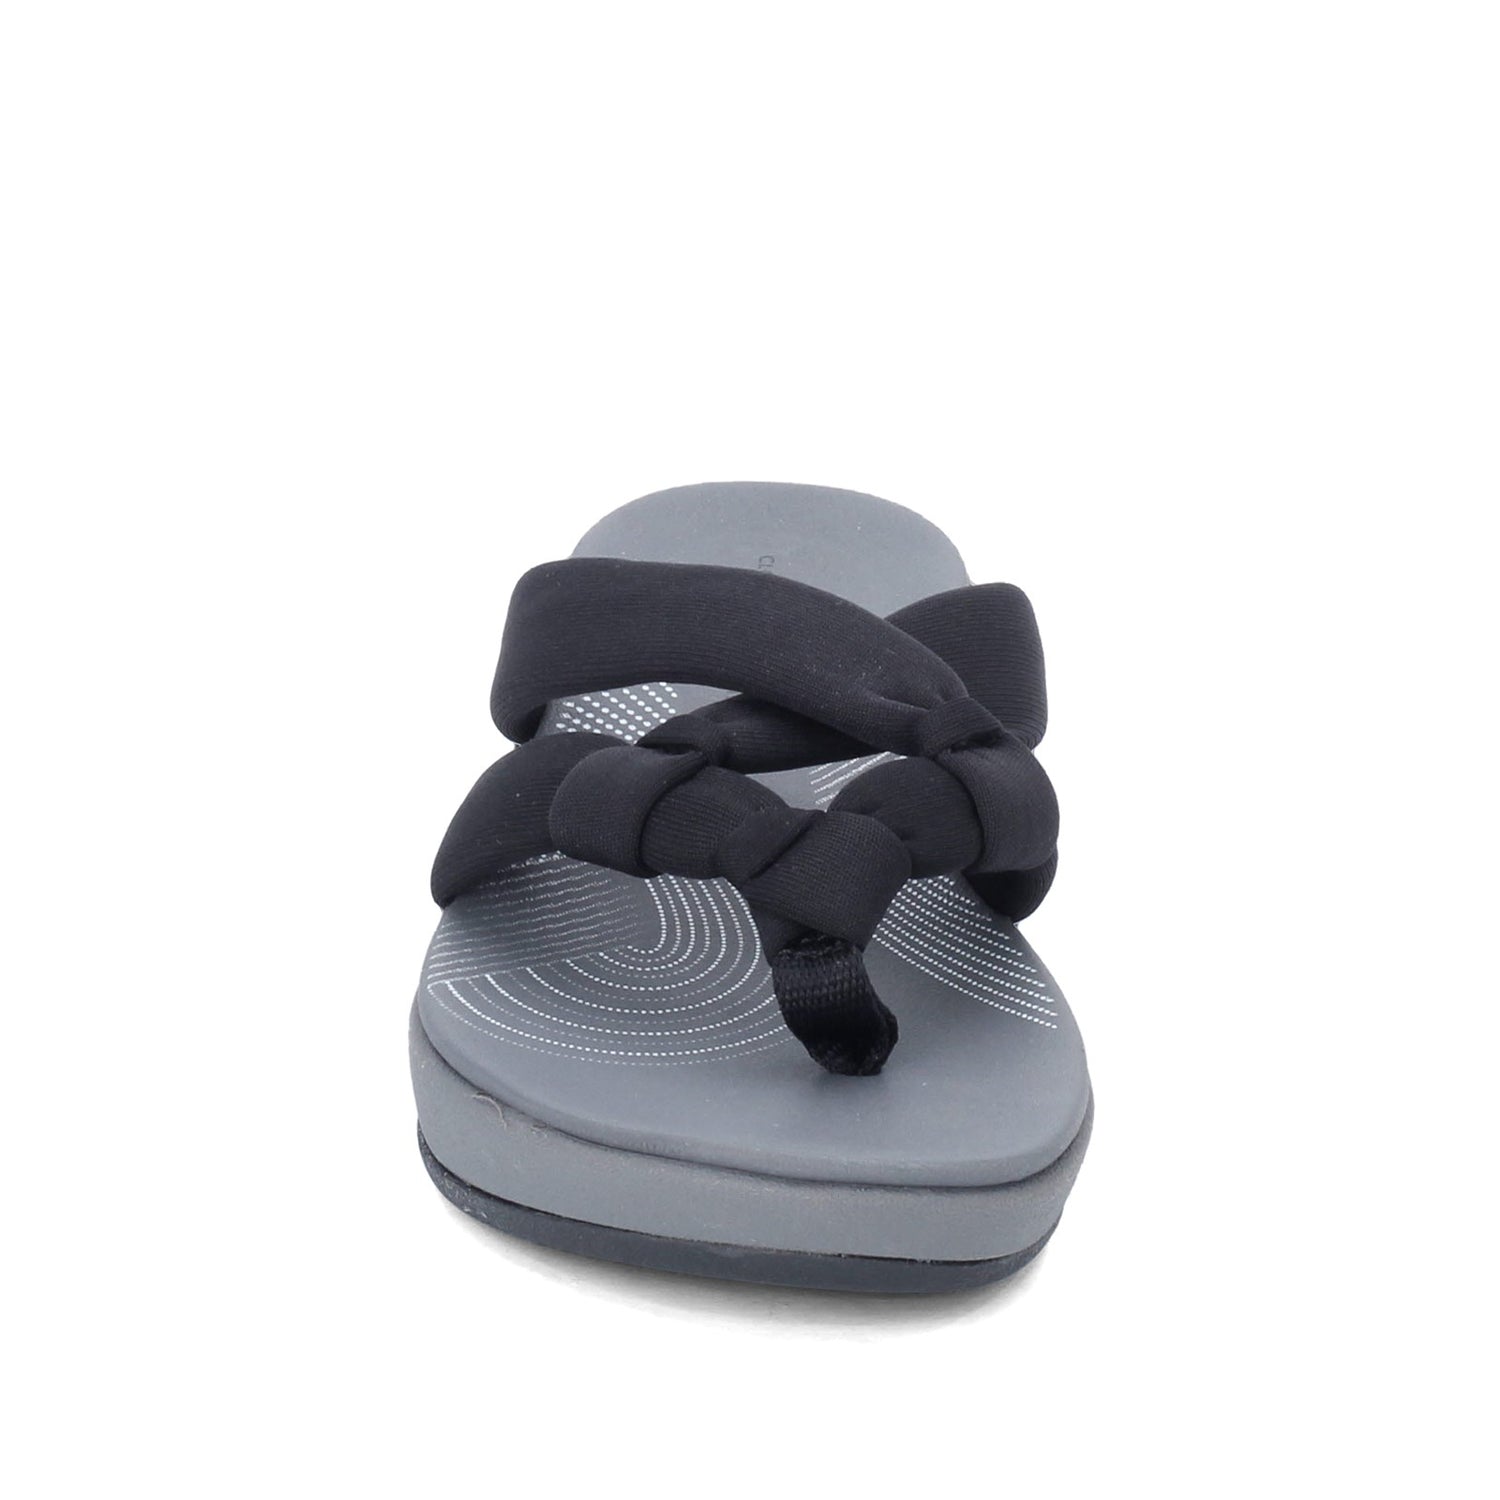 Peltz Shoes  Women's Clarks Arla Jane Thong Sandals BLACK 26141004